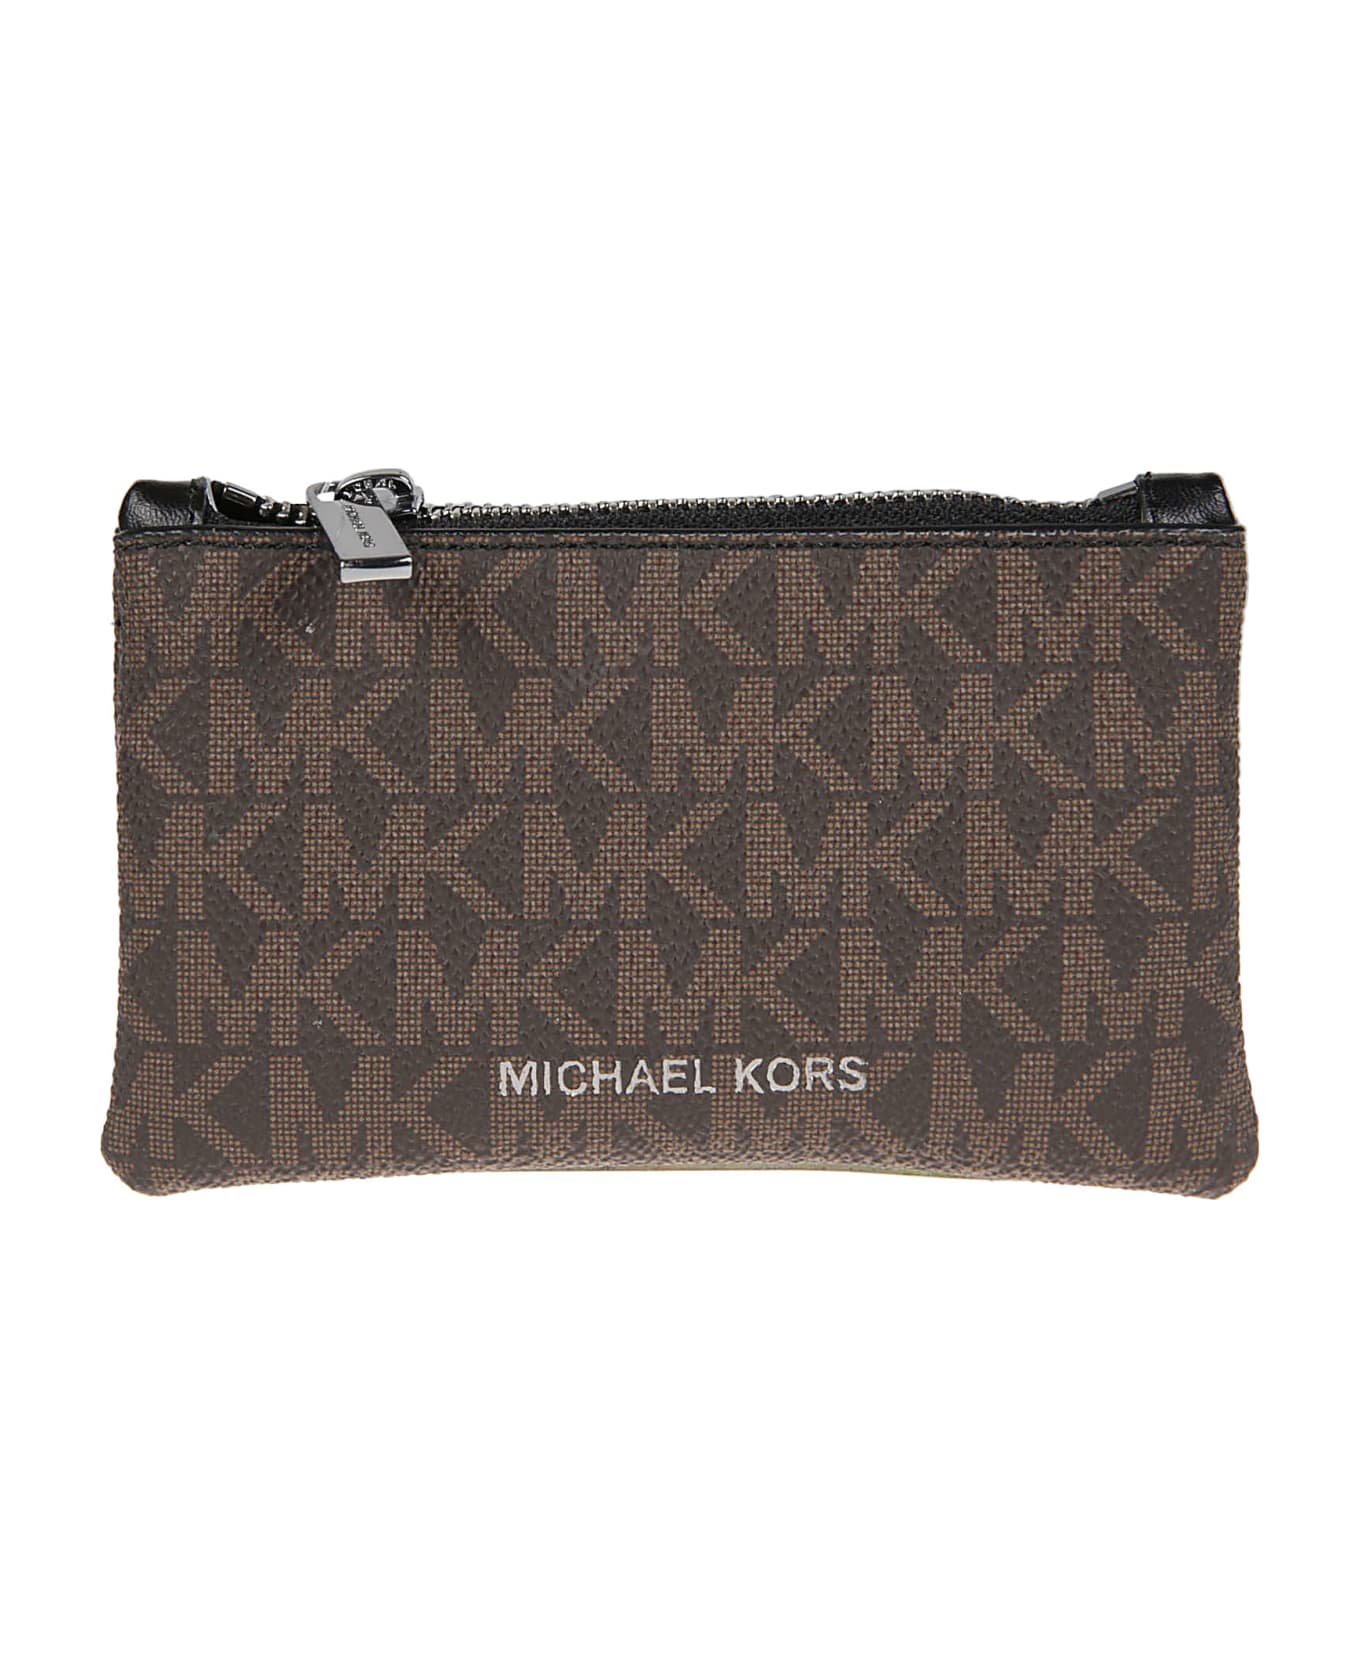 Michael Kors Coin Wallet - Brown/black 財布